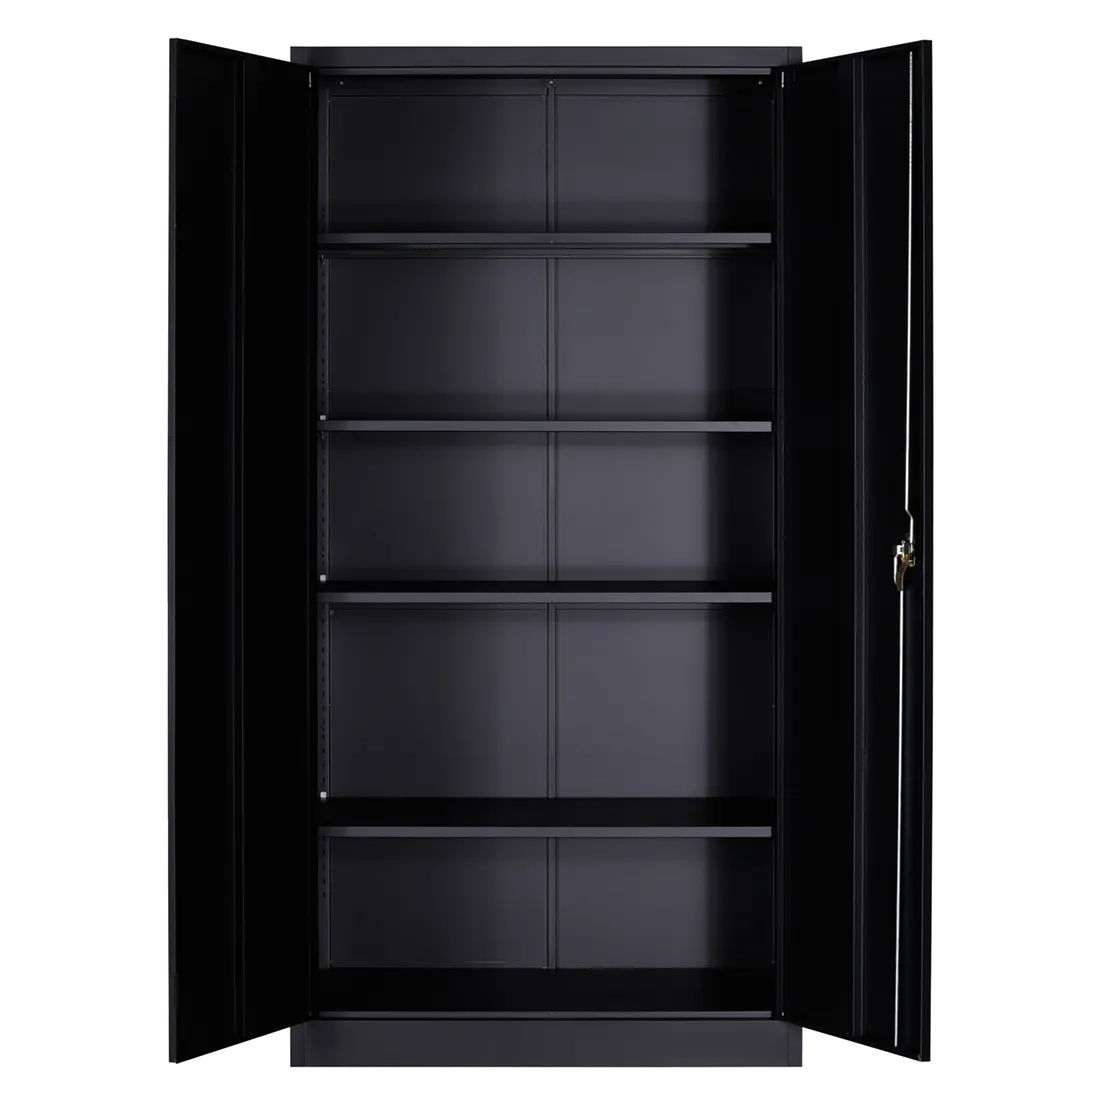 metal black swing Door steel storage cabinet filing Cabinet with 4 adjustable shelves iron cupboard suit for home office